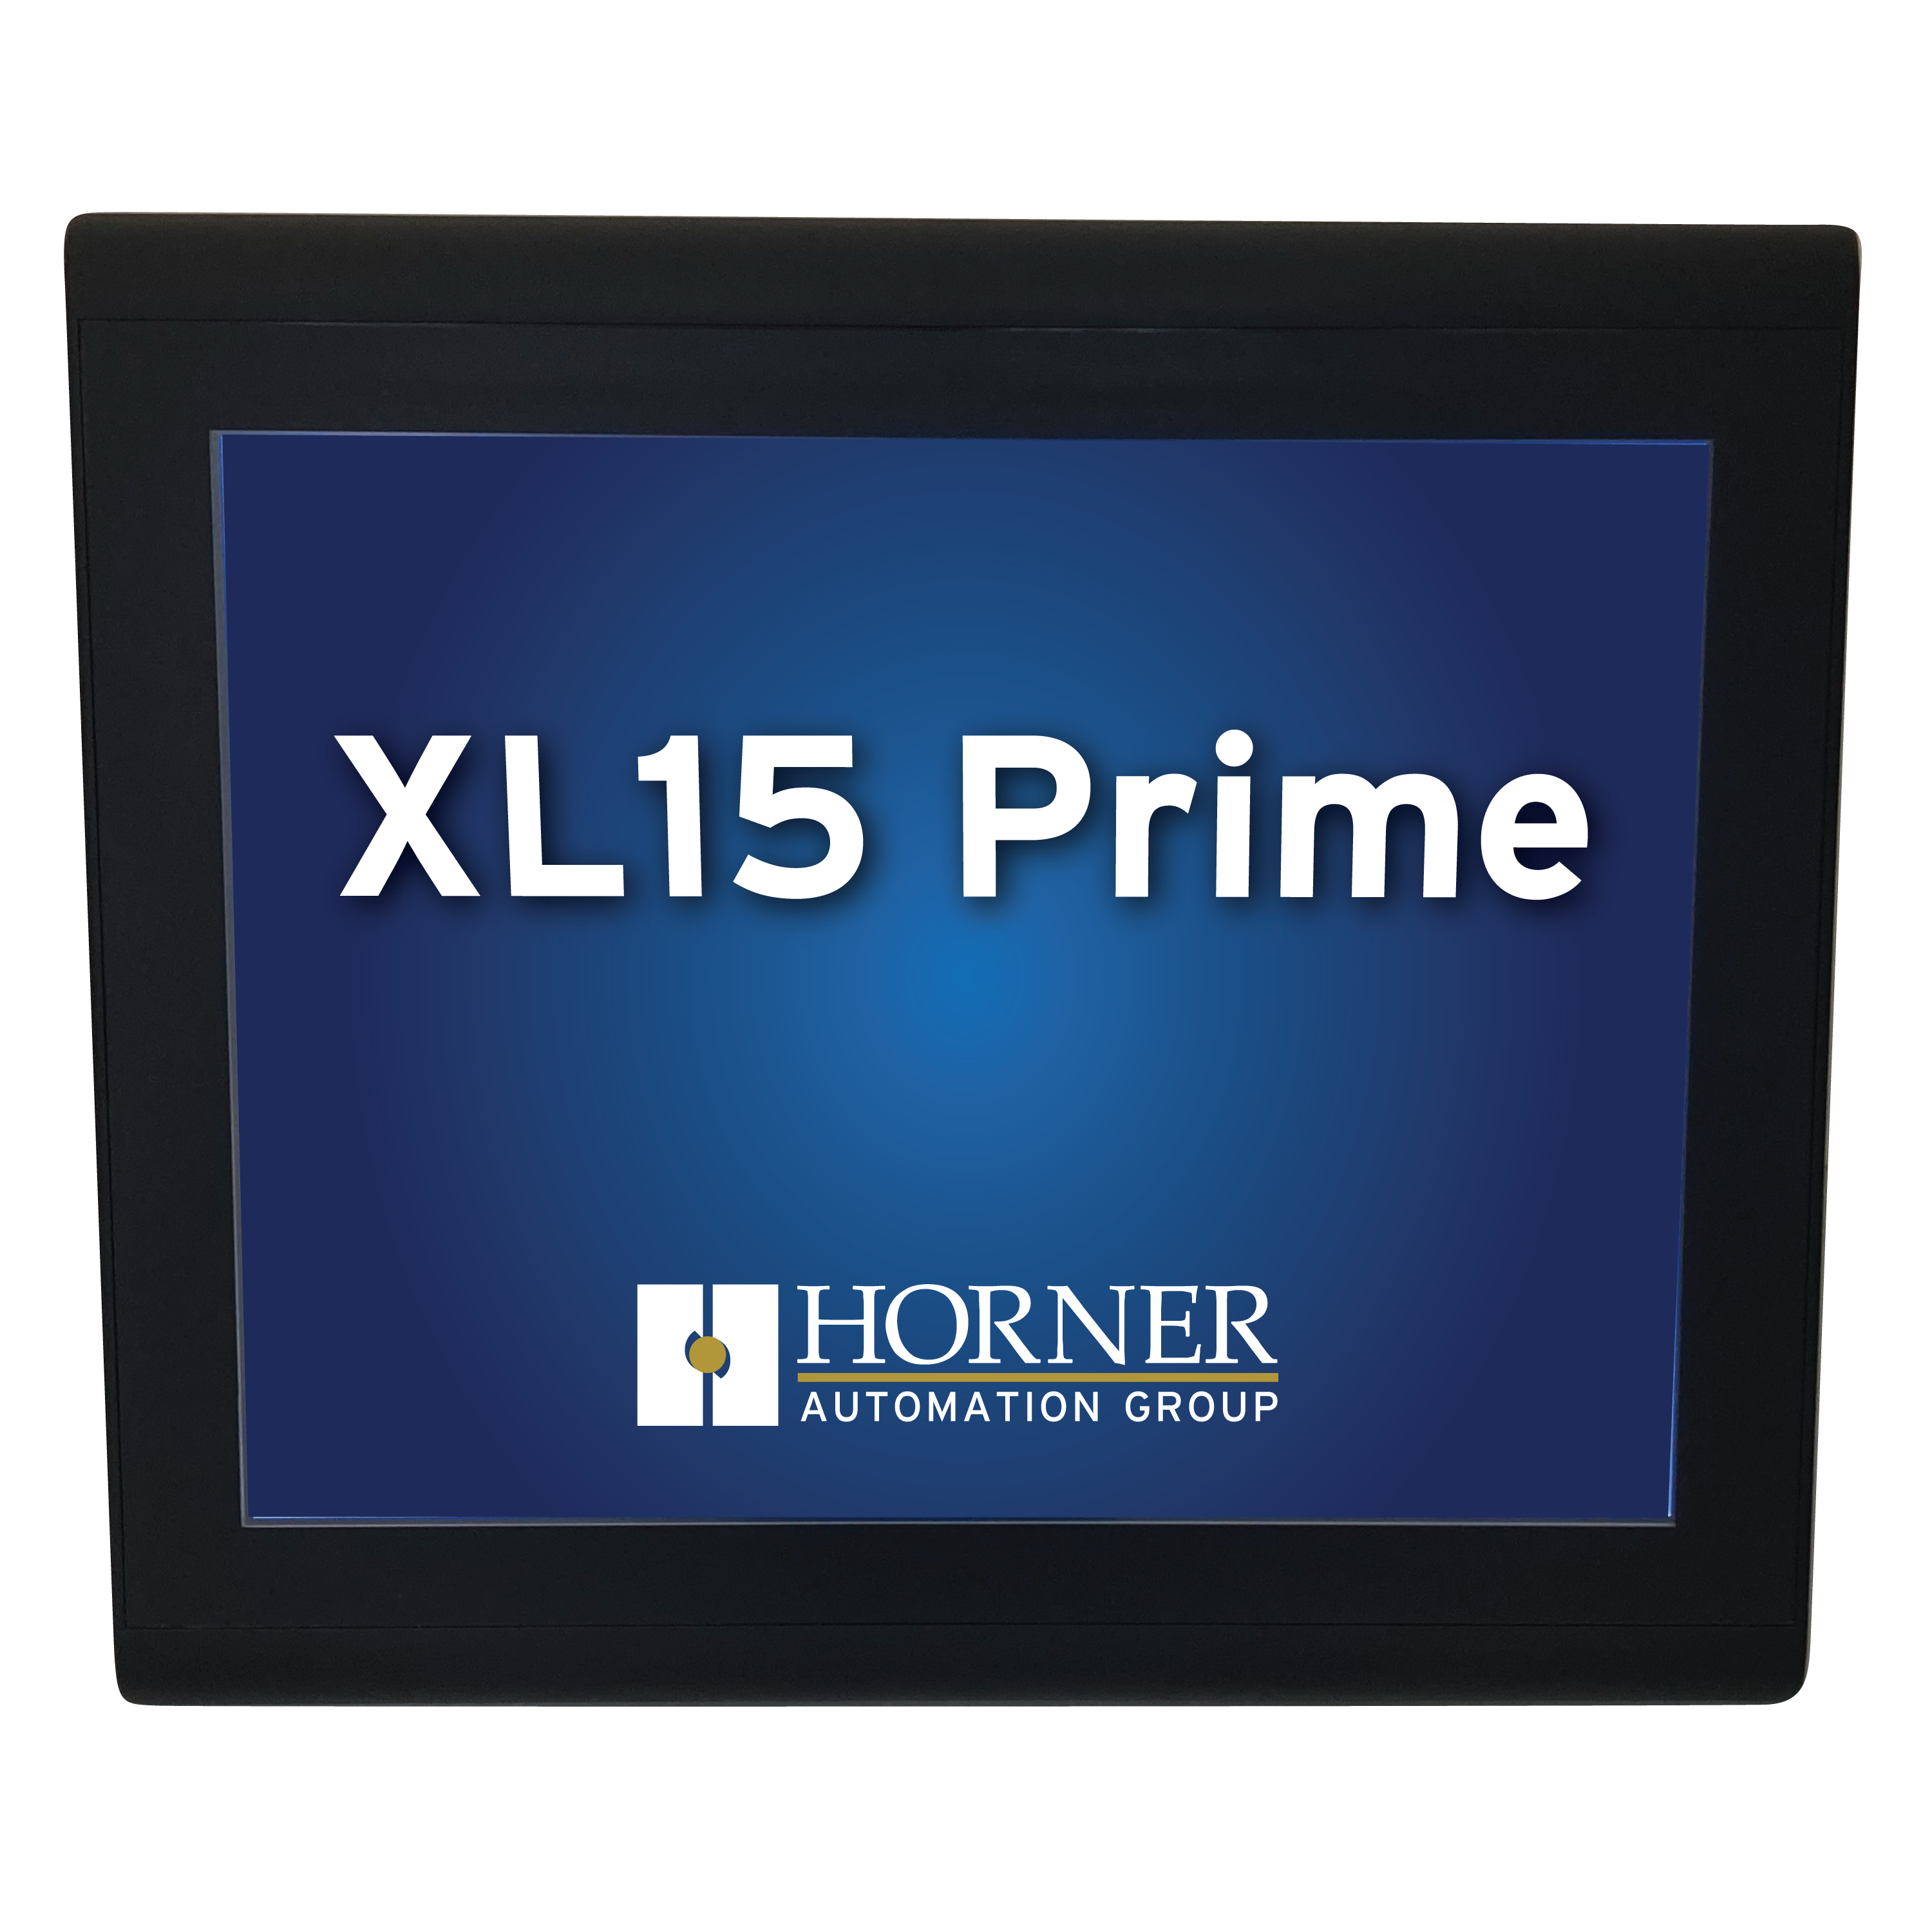 CTQ_XL15 prime Horner Automation